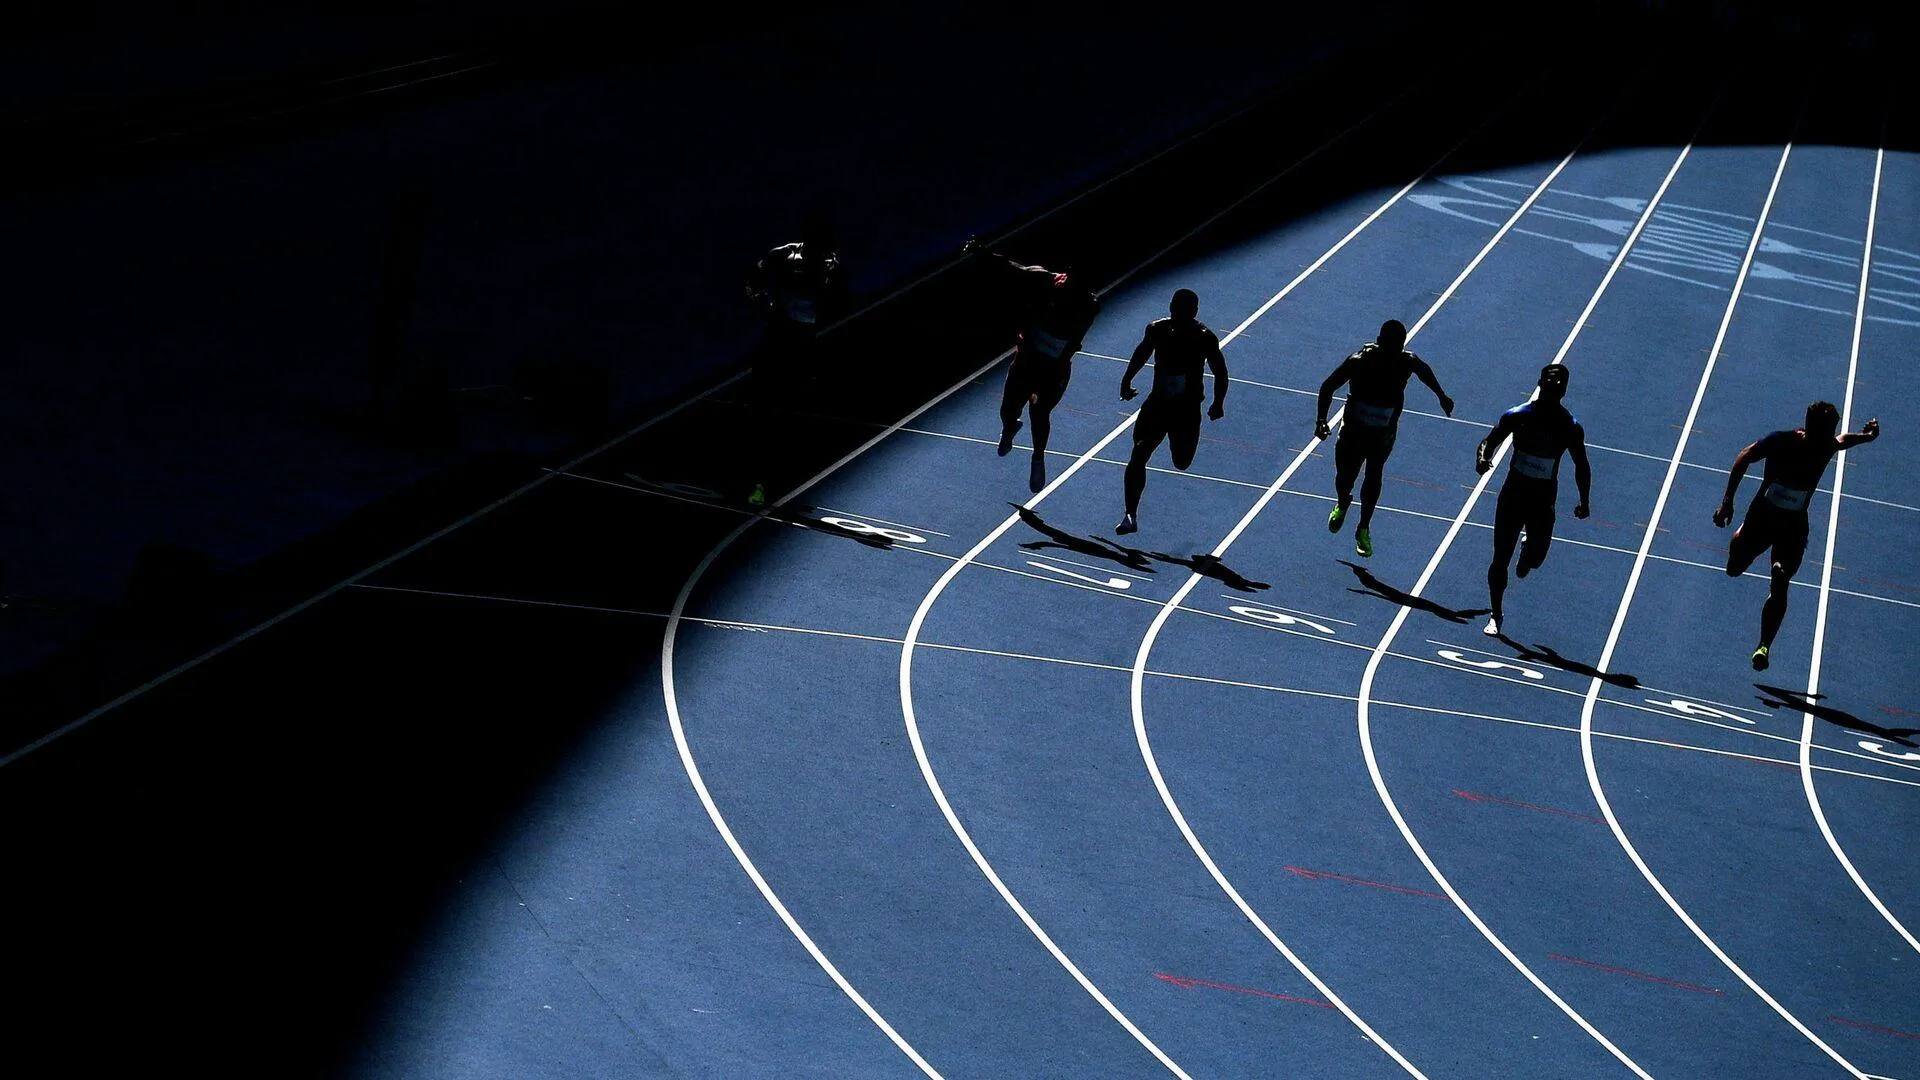 Российских спортсменов оставят без перешедших к ним медалей Олимпиад